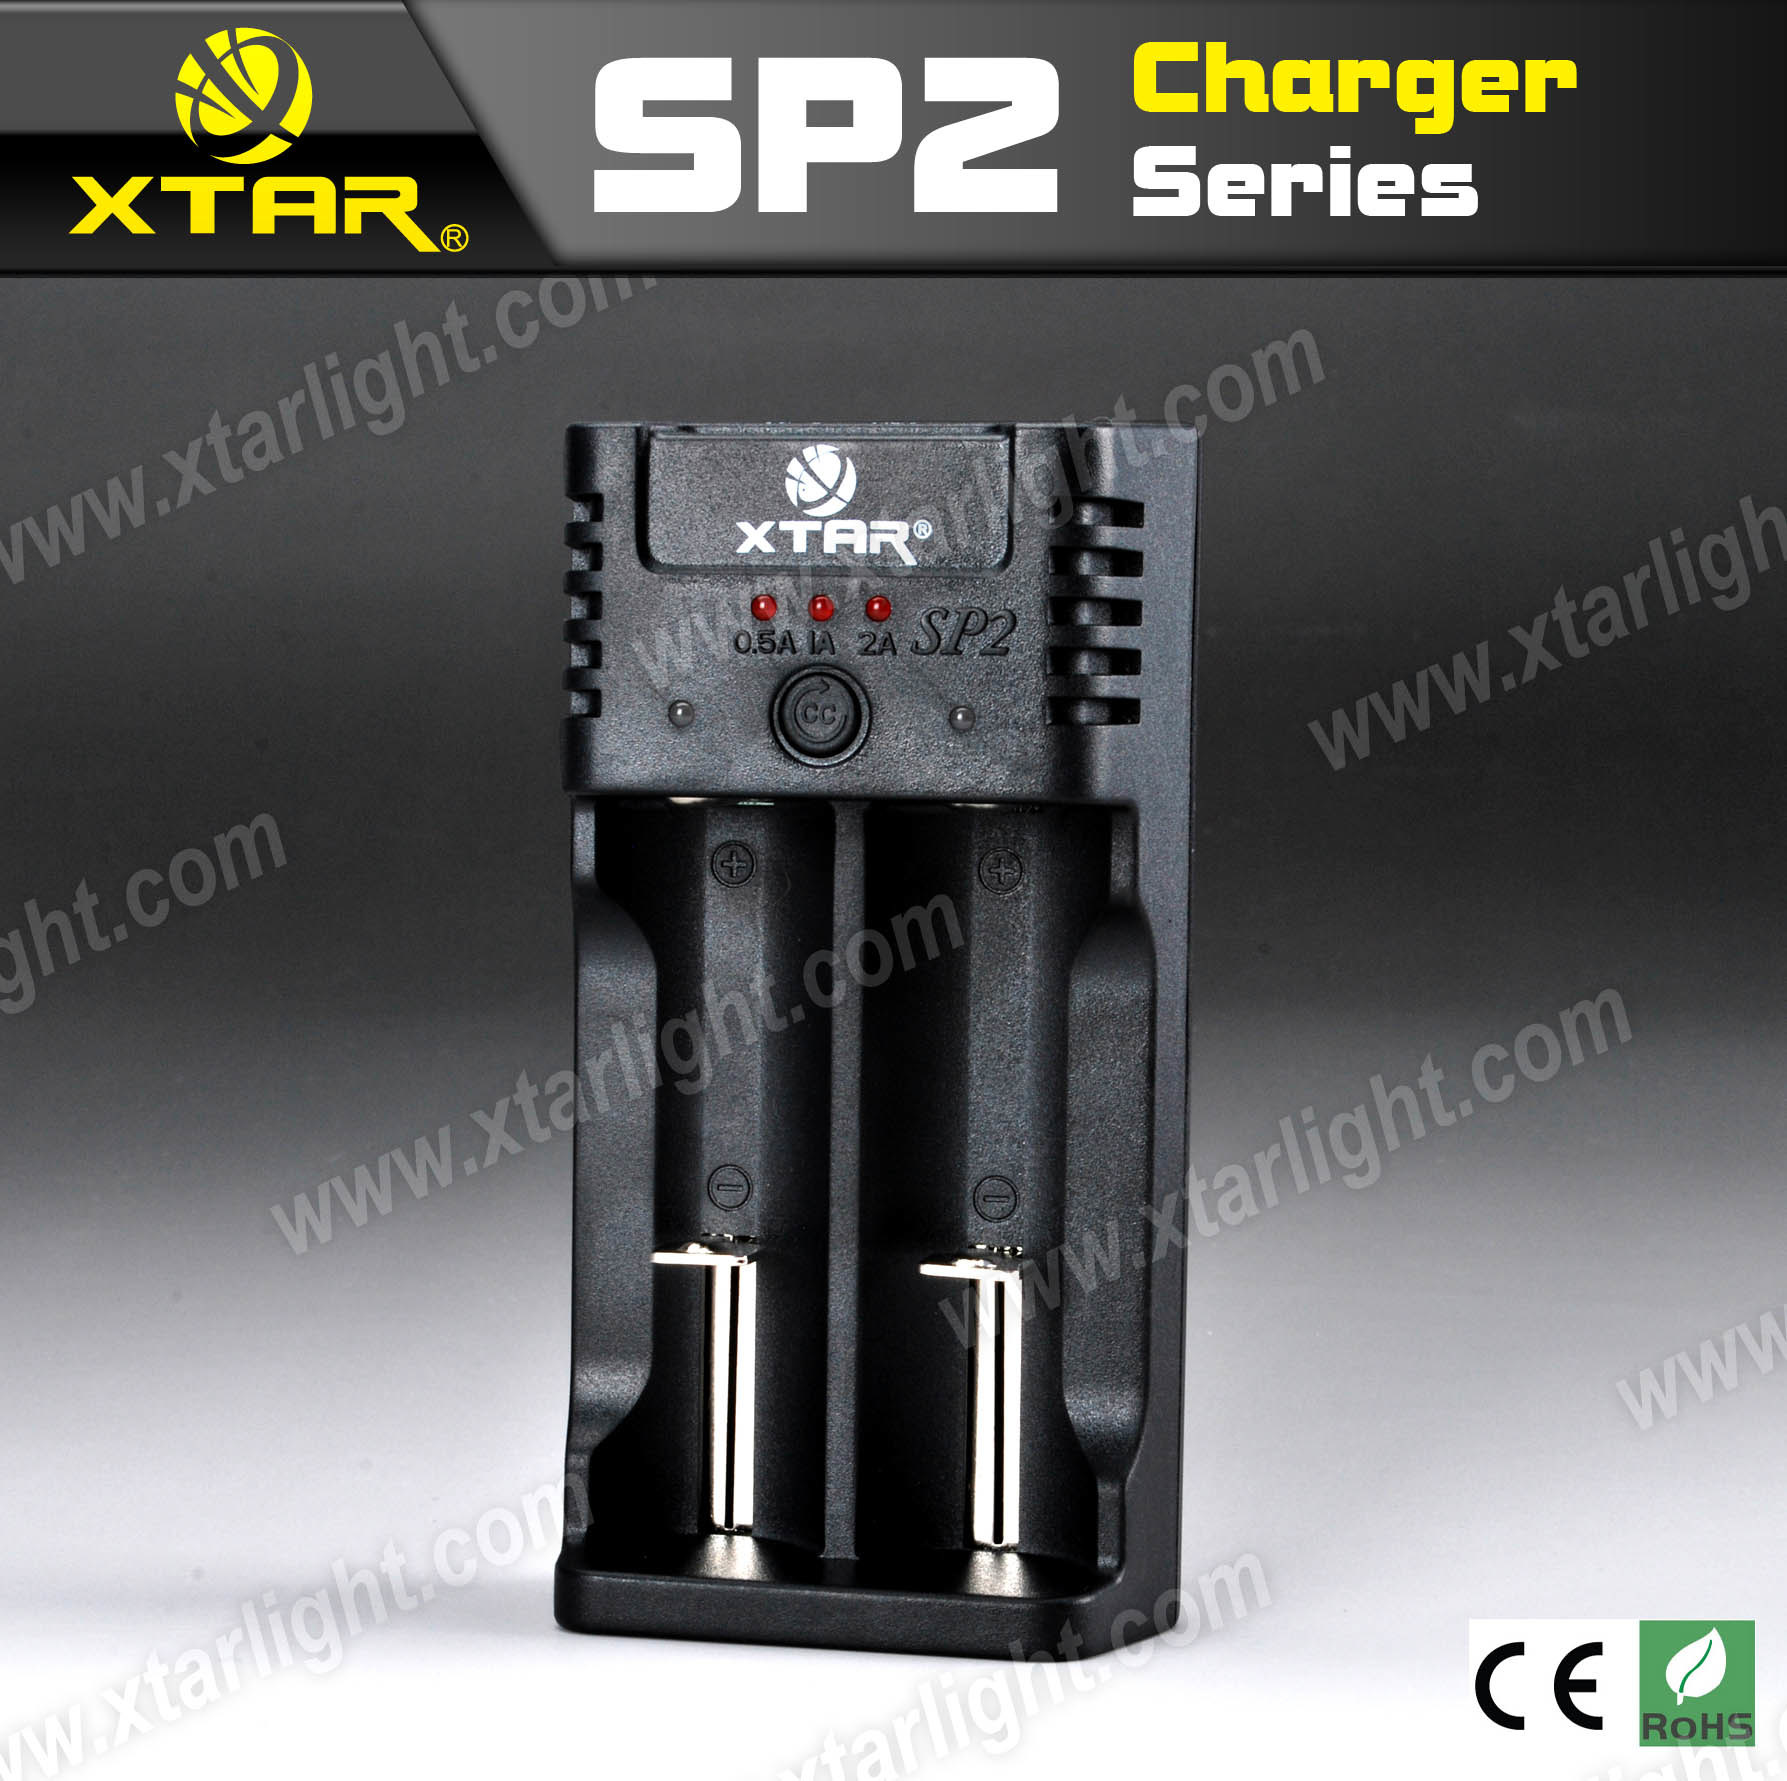 Xtar Sp2 3.6V/3.7V Li-ion 18650/26650 Charger